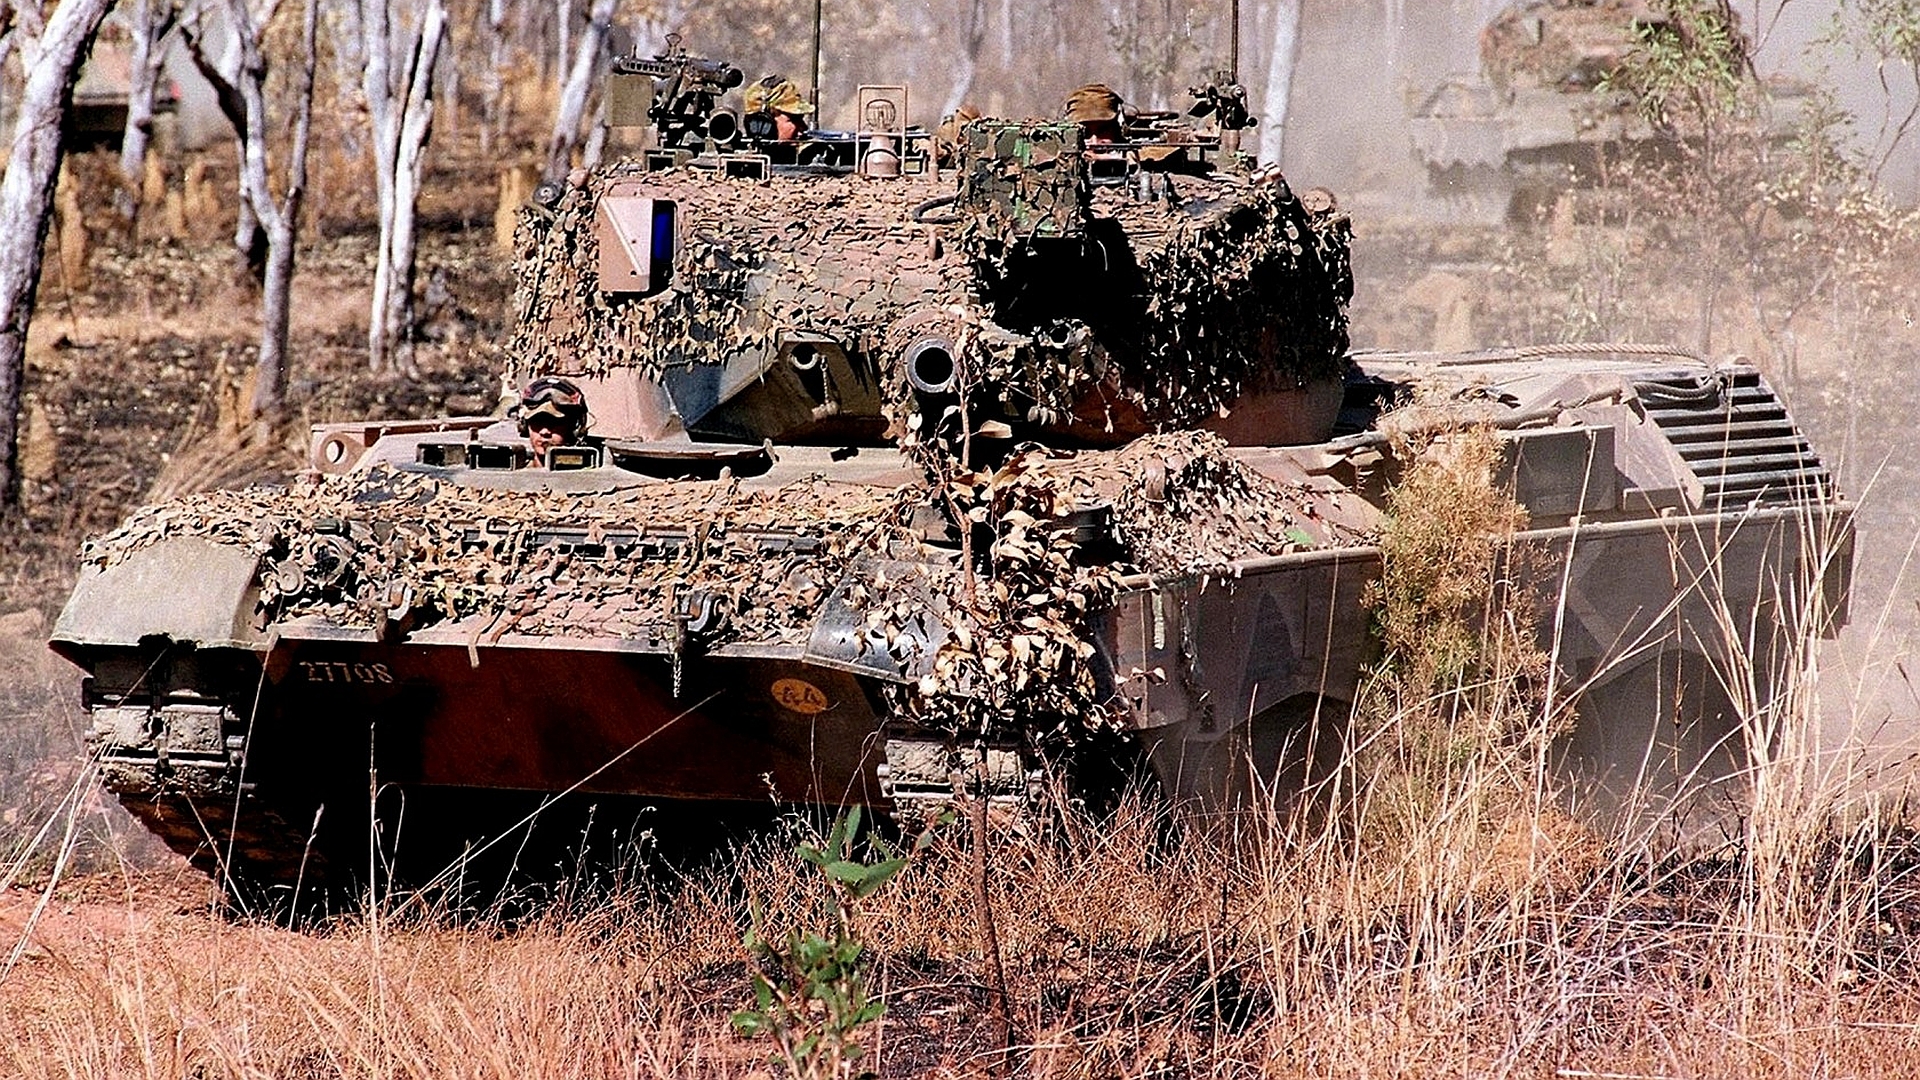 Popular Leopard 1 Image for Phone